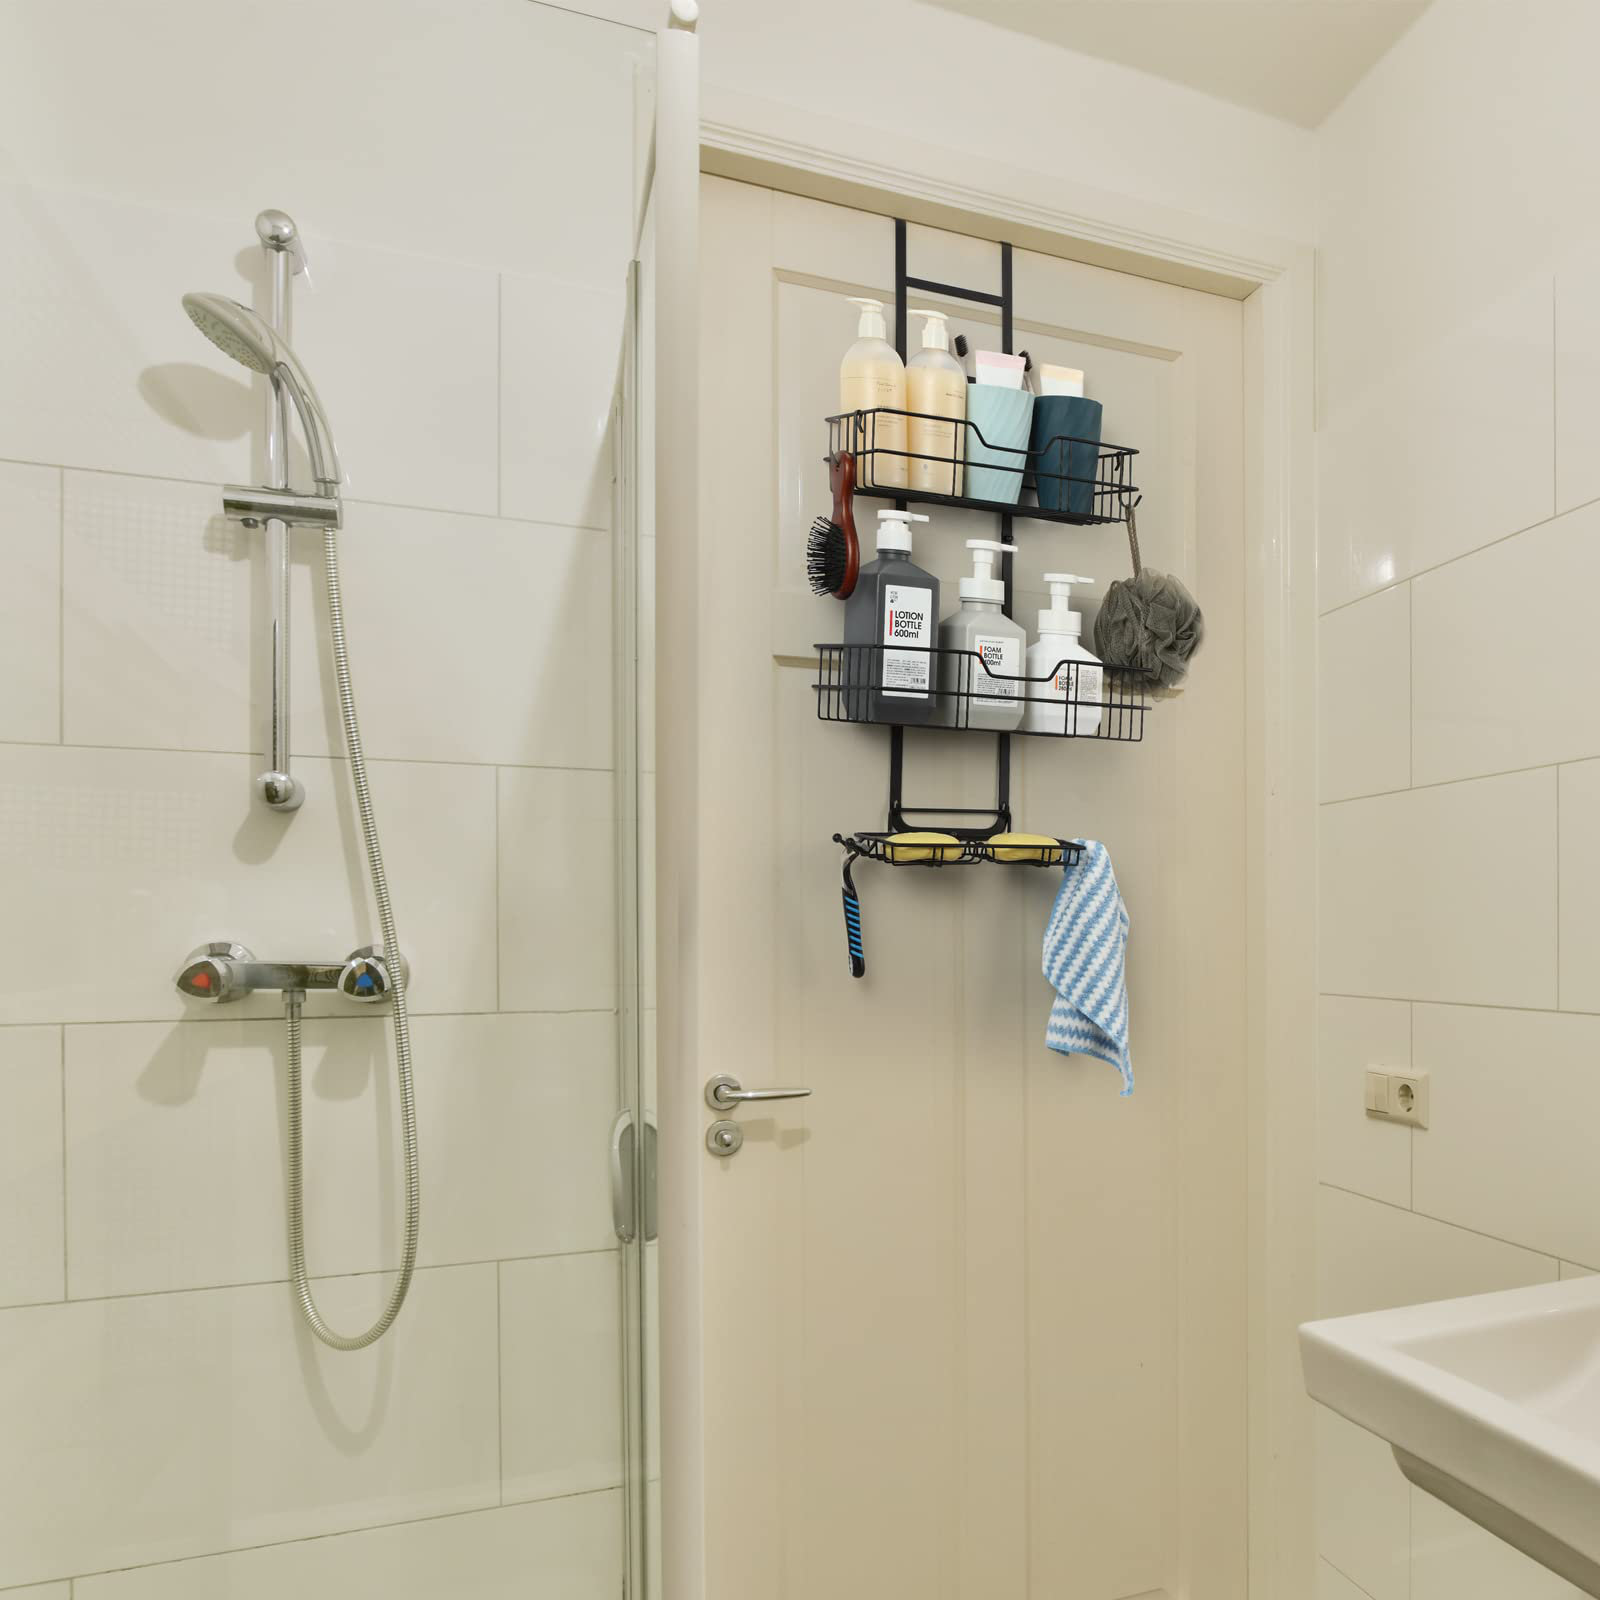 Rebrilliant Devonda 3 Tier Hanging Stainless Steel Shower Caddy, Detachable Shampoo  Organizer Rack for Bathroom, Bronze